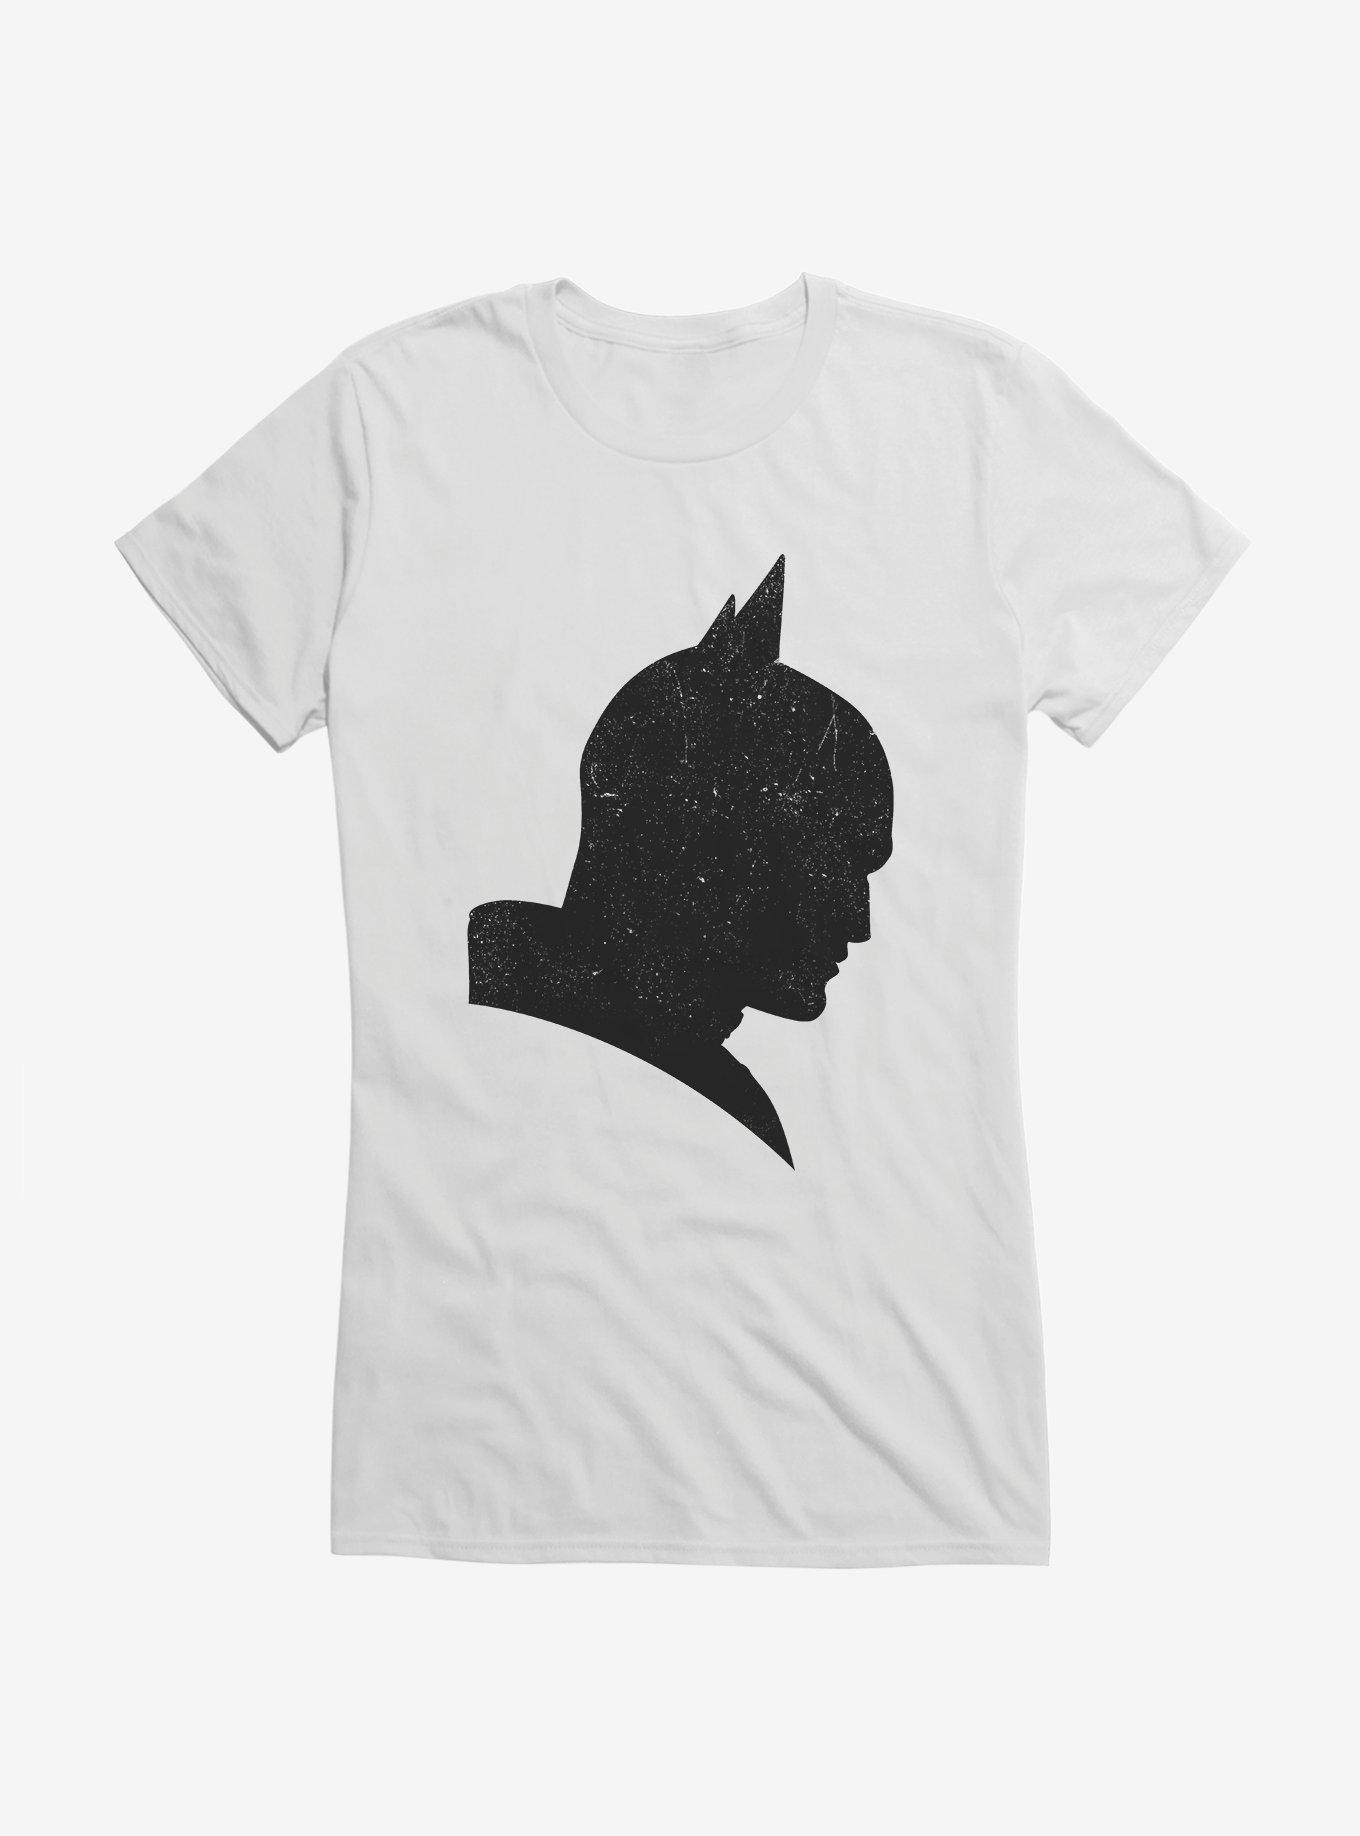 DC Comics The Batman Solid Shadow Girl's T-Shirt